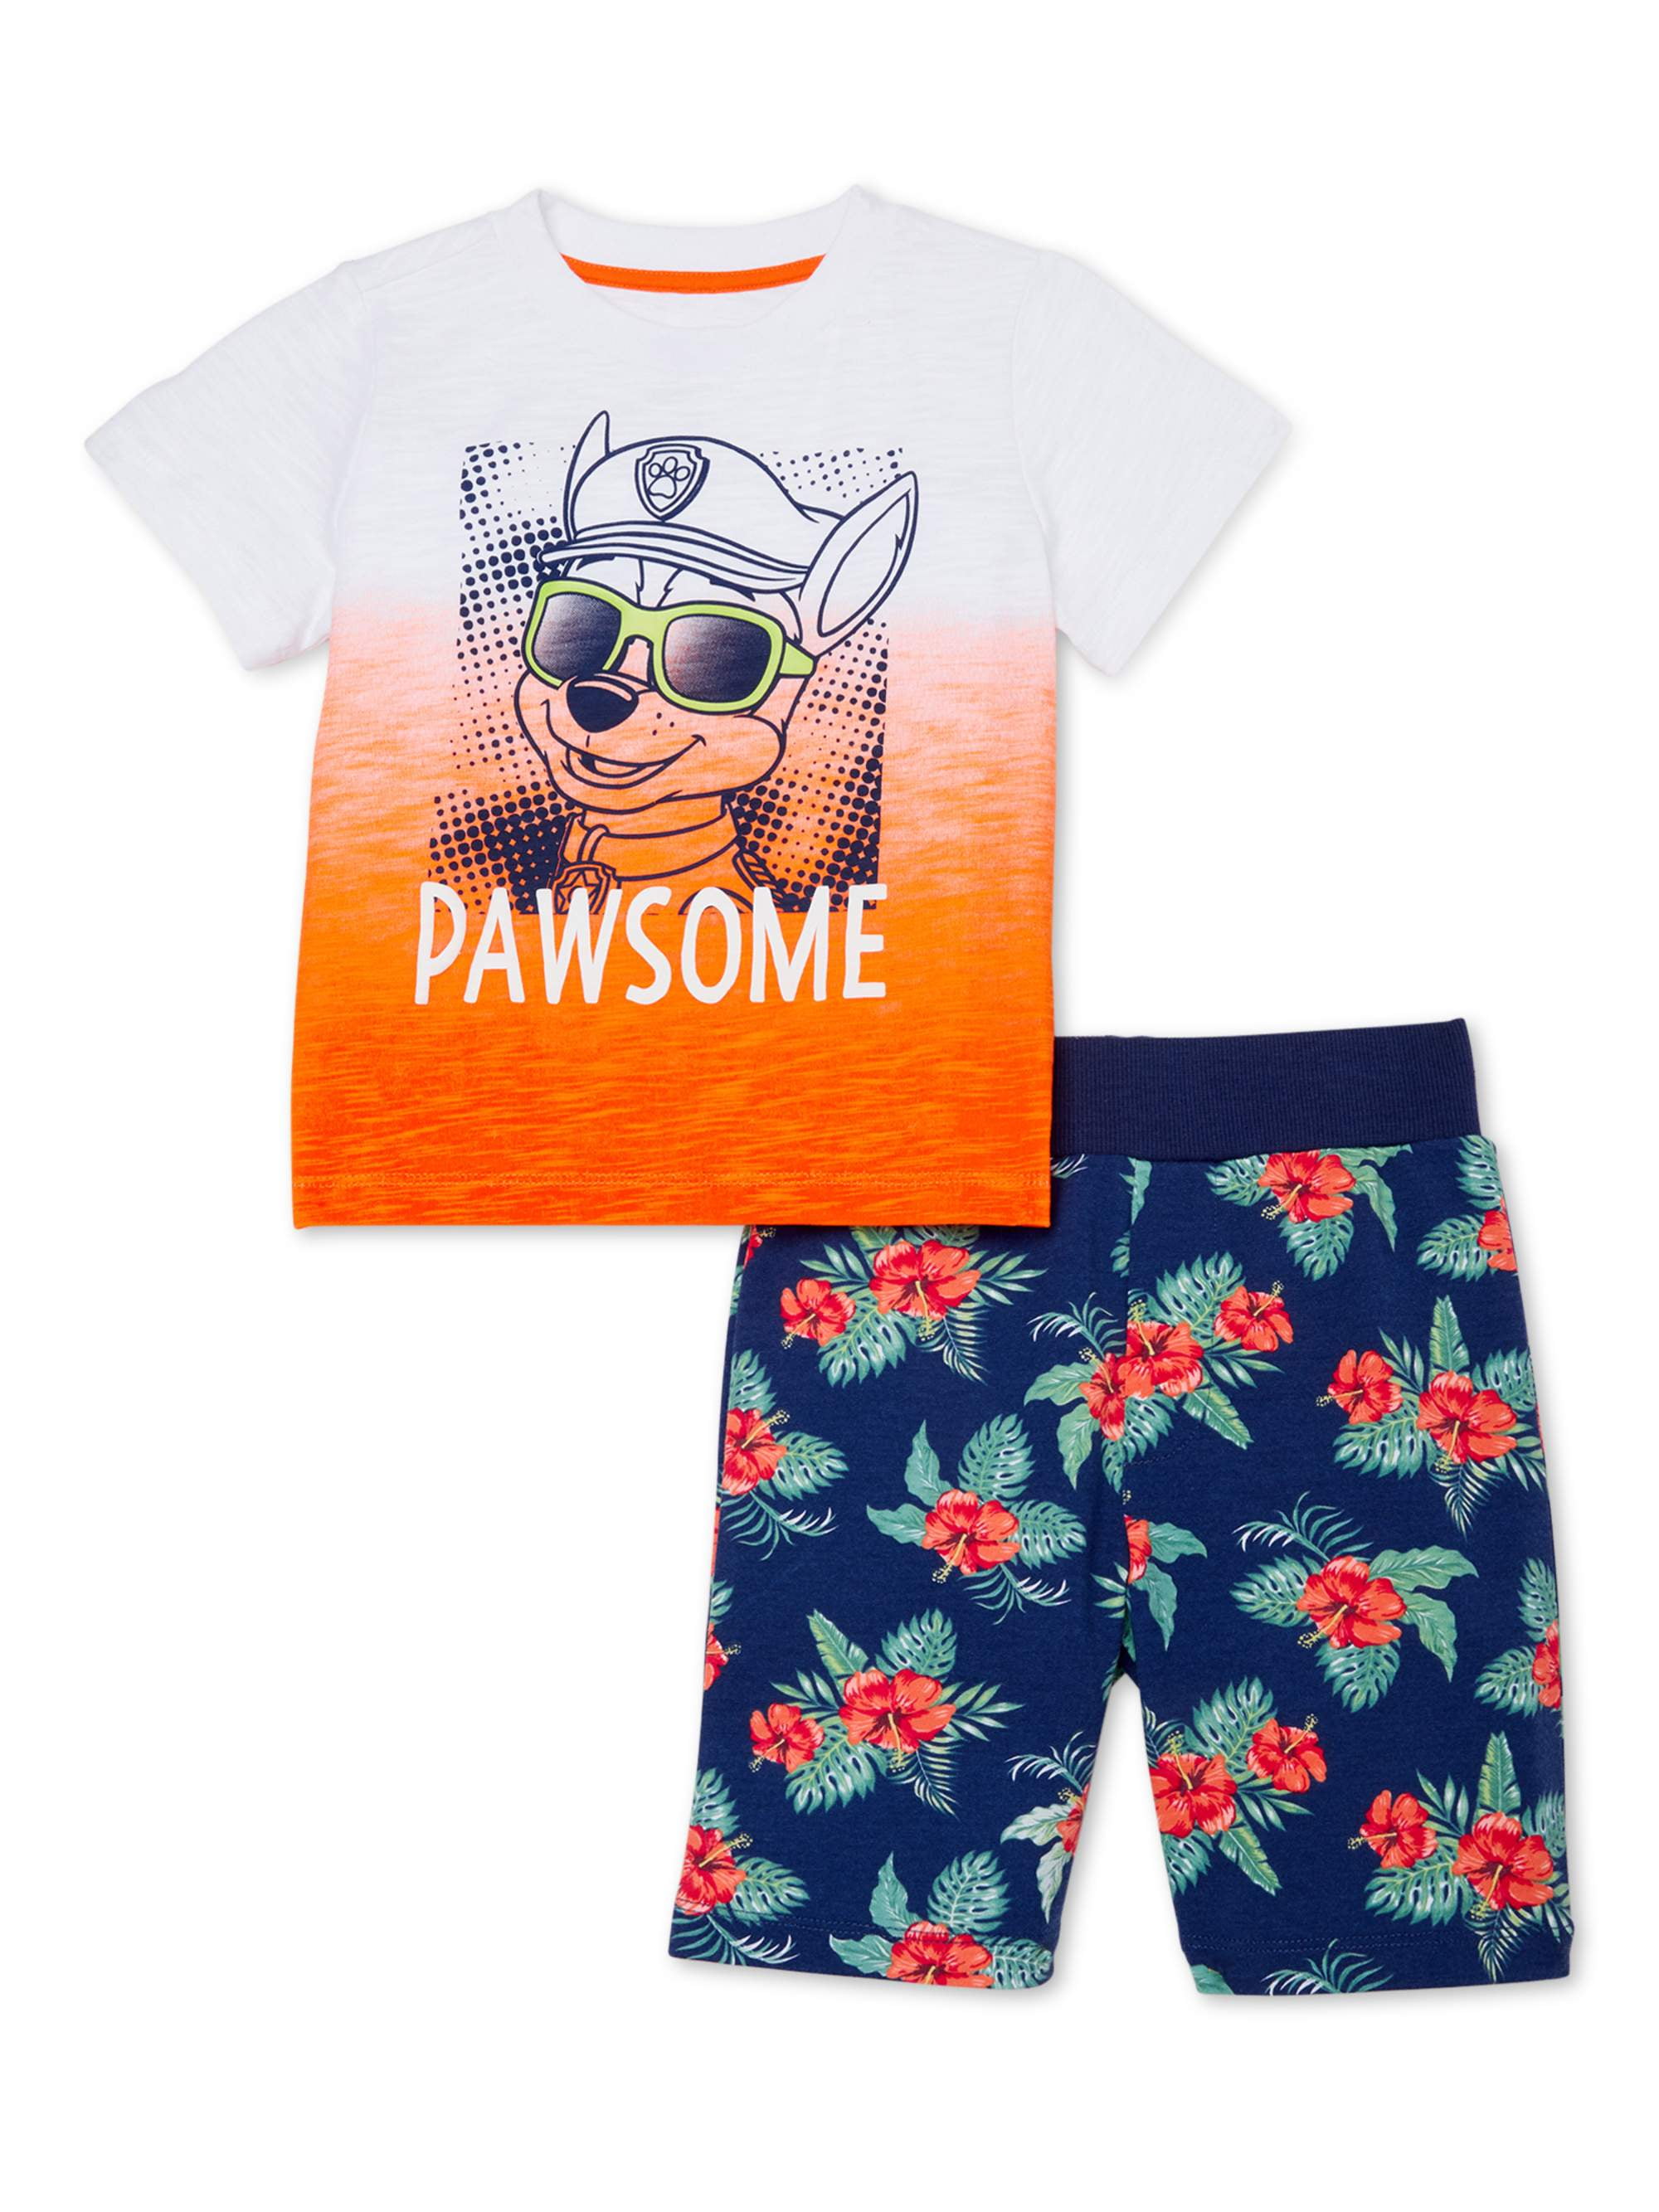 Paw Patrol Shirt Tank Top /& Shorts 3 Piece Set Summer Active-wear Bundle Clothes for Boys